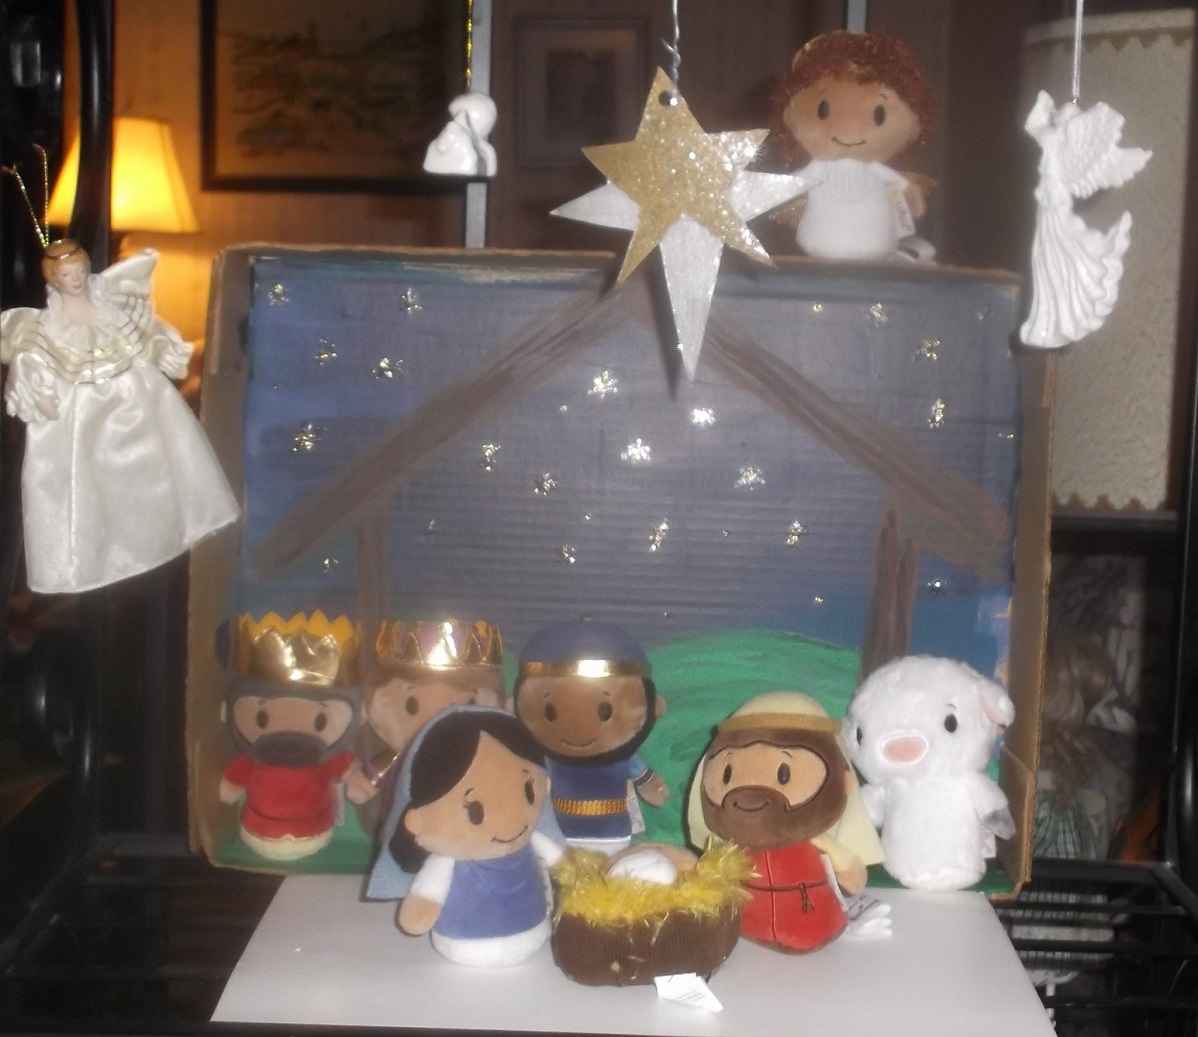 Nativity set up last year